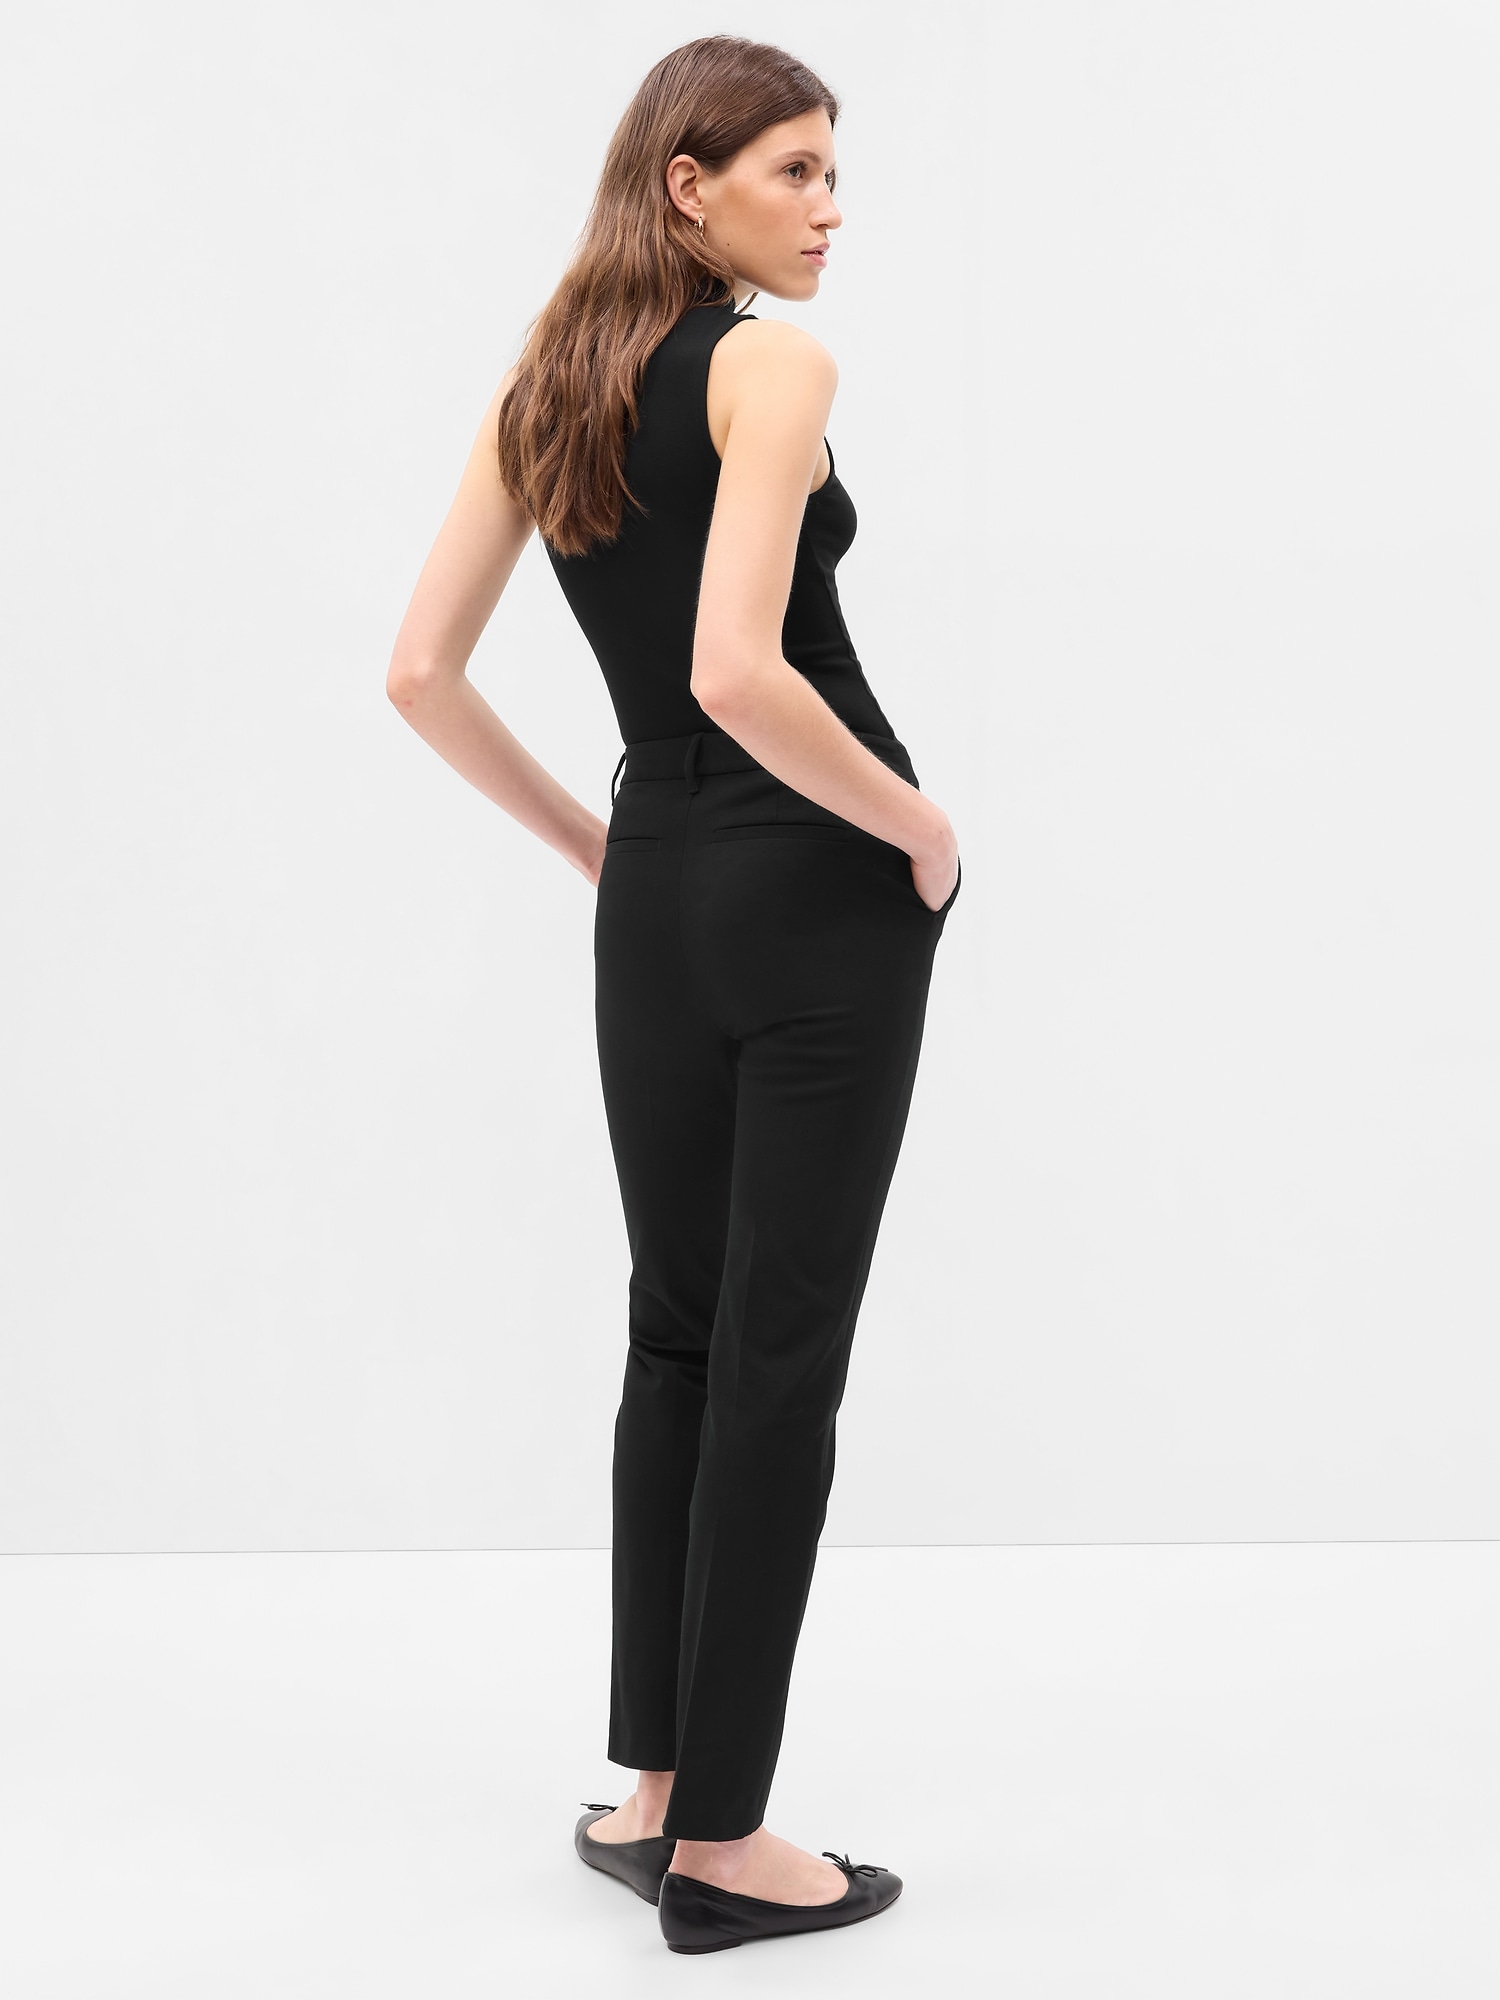 Zara Woman Black Stretch Ankle Zipper Skinny Legging, Women's